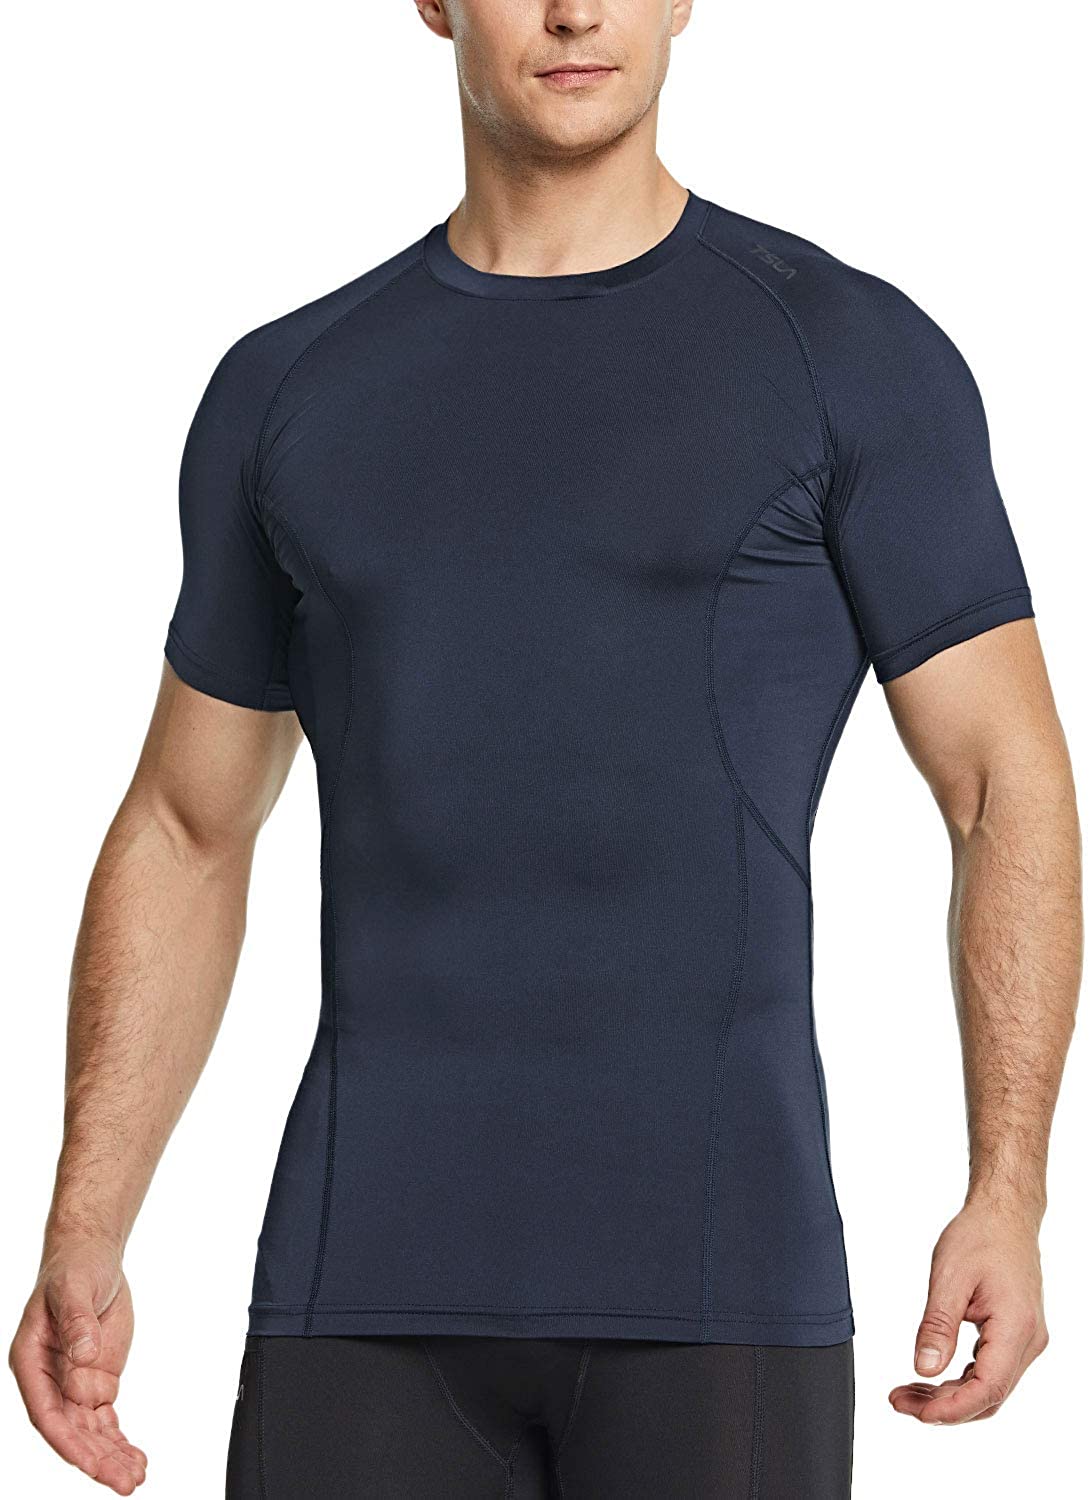  TSLA Men's UPF 50+ Quick Dry Short Sleeve Compression